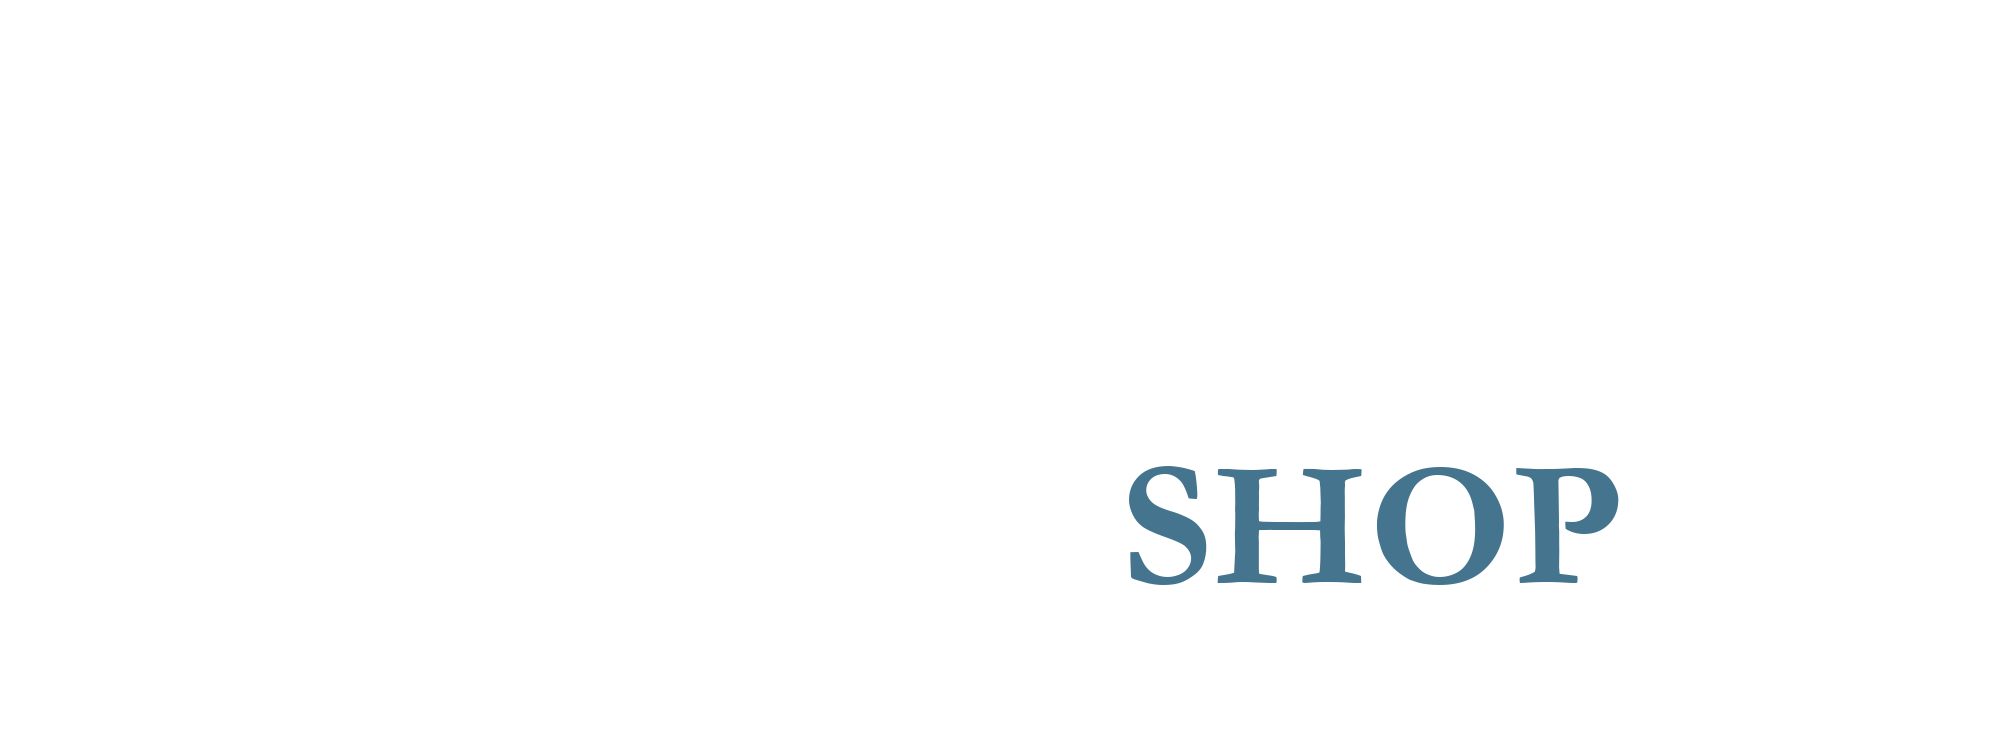 Mellman Tech SHOP